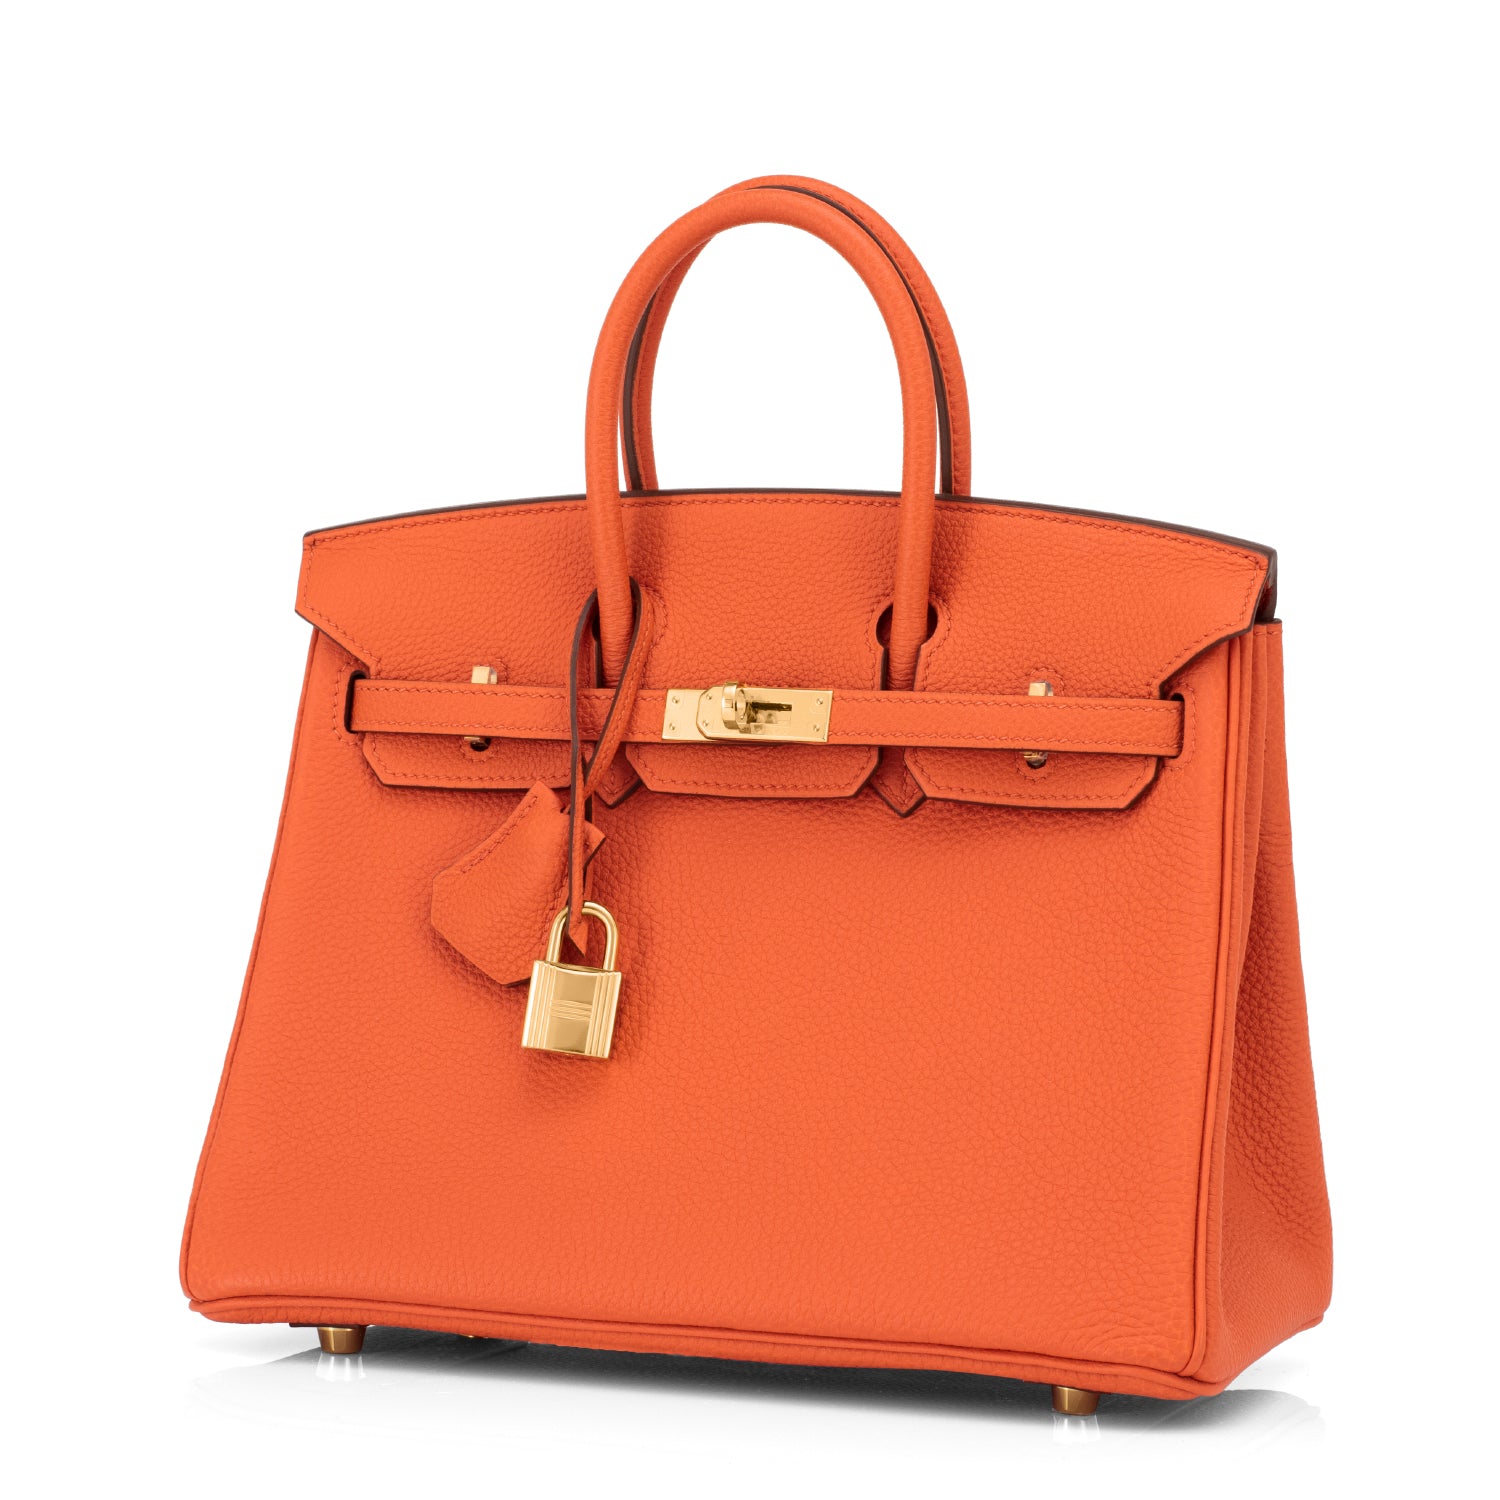 Hermes Orange Bag - love it!